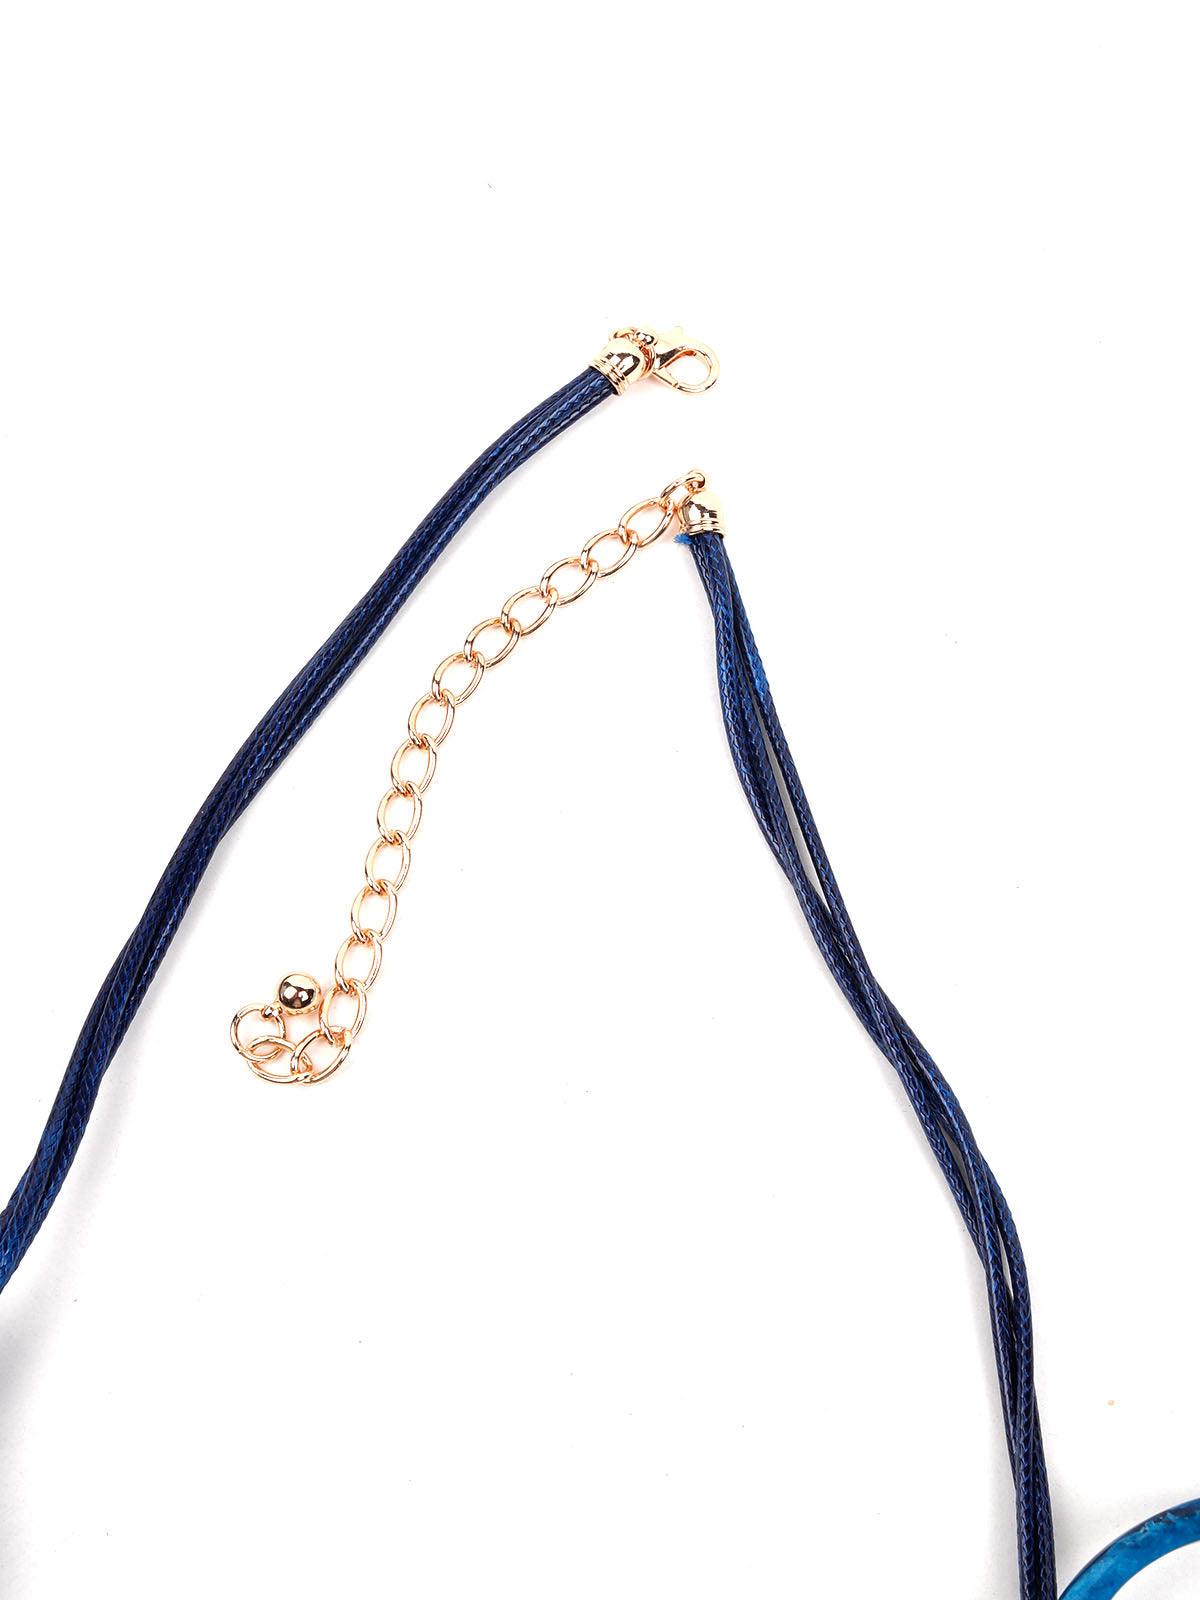 Women's Vibrant Blue Loop Statement Necklace - Odette